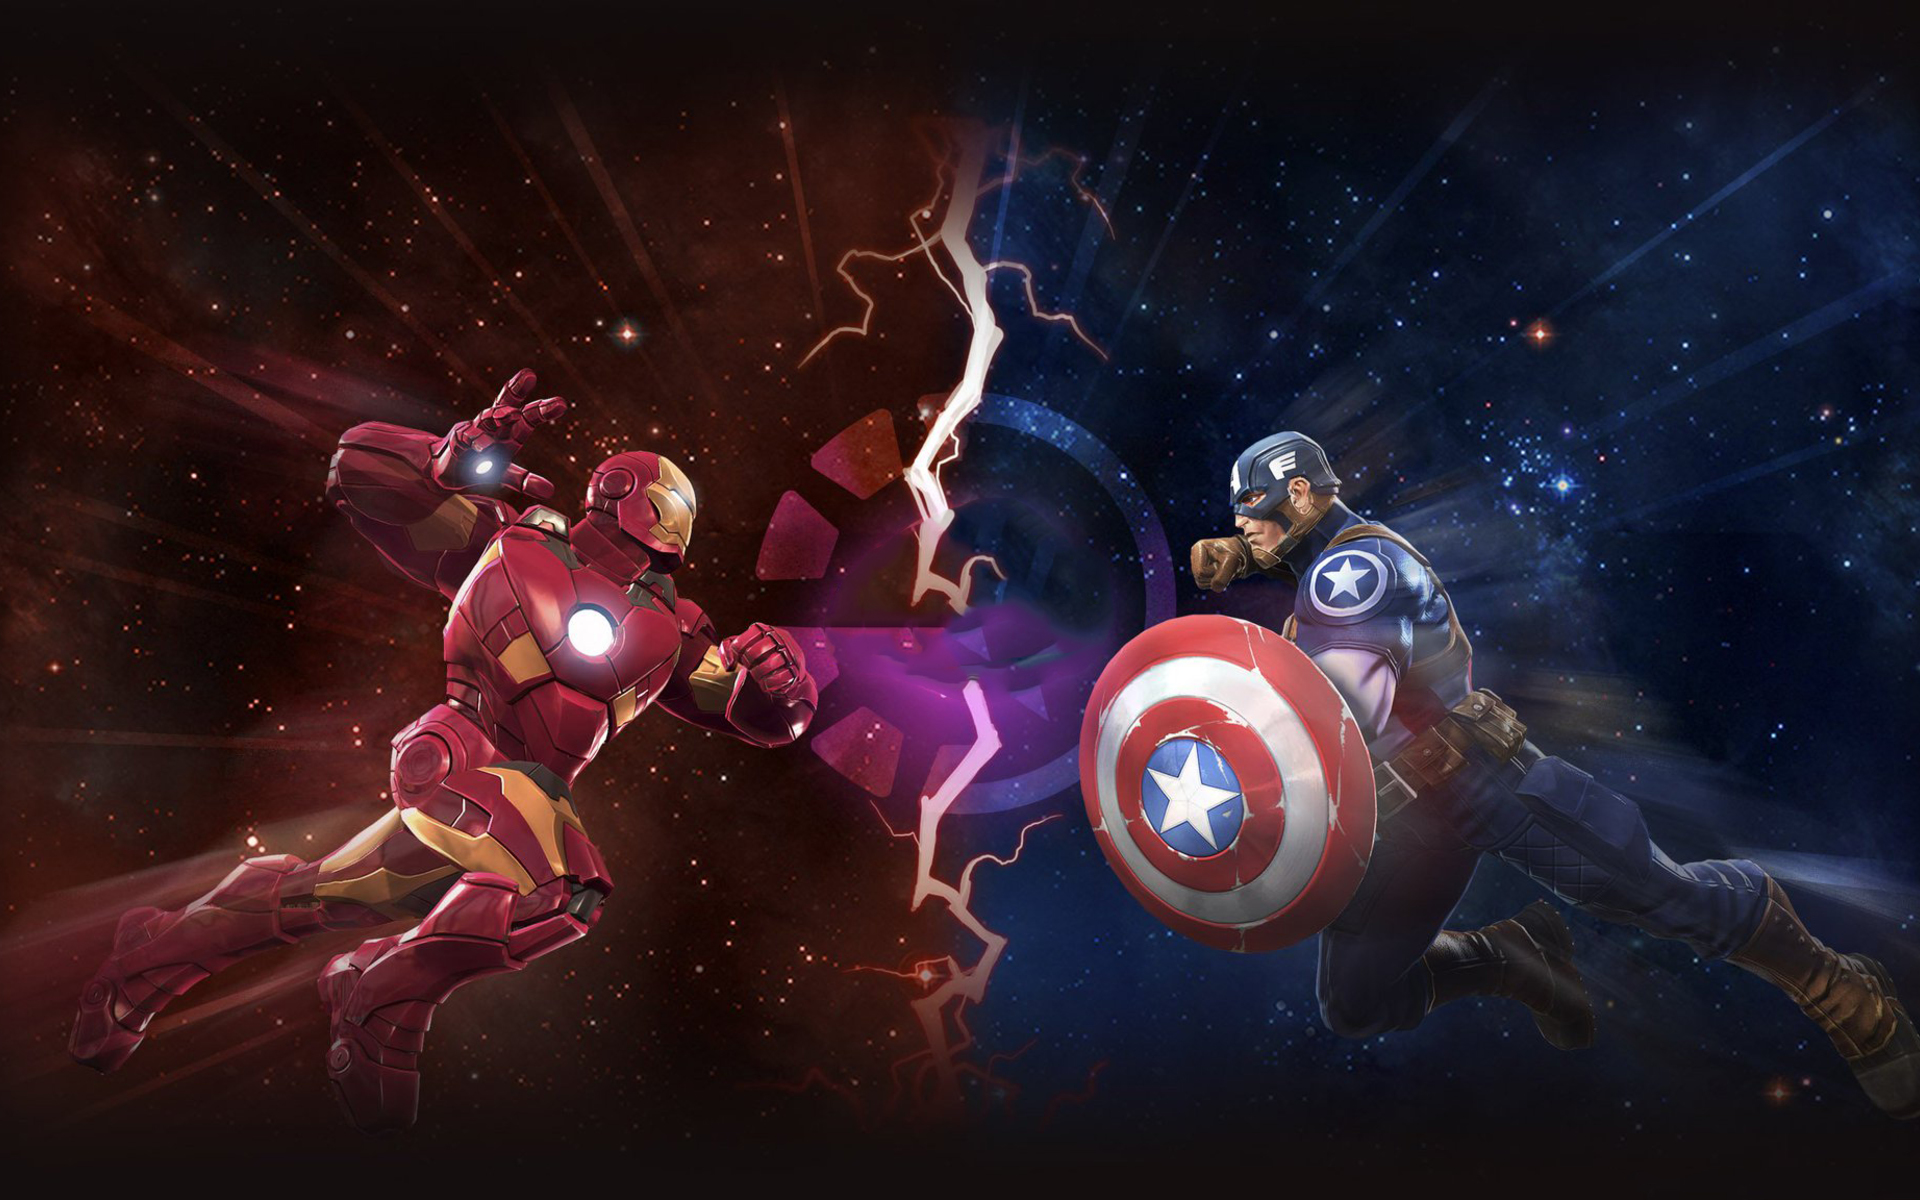 Download wallpaper Captain America vs Iron Man, superheroes